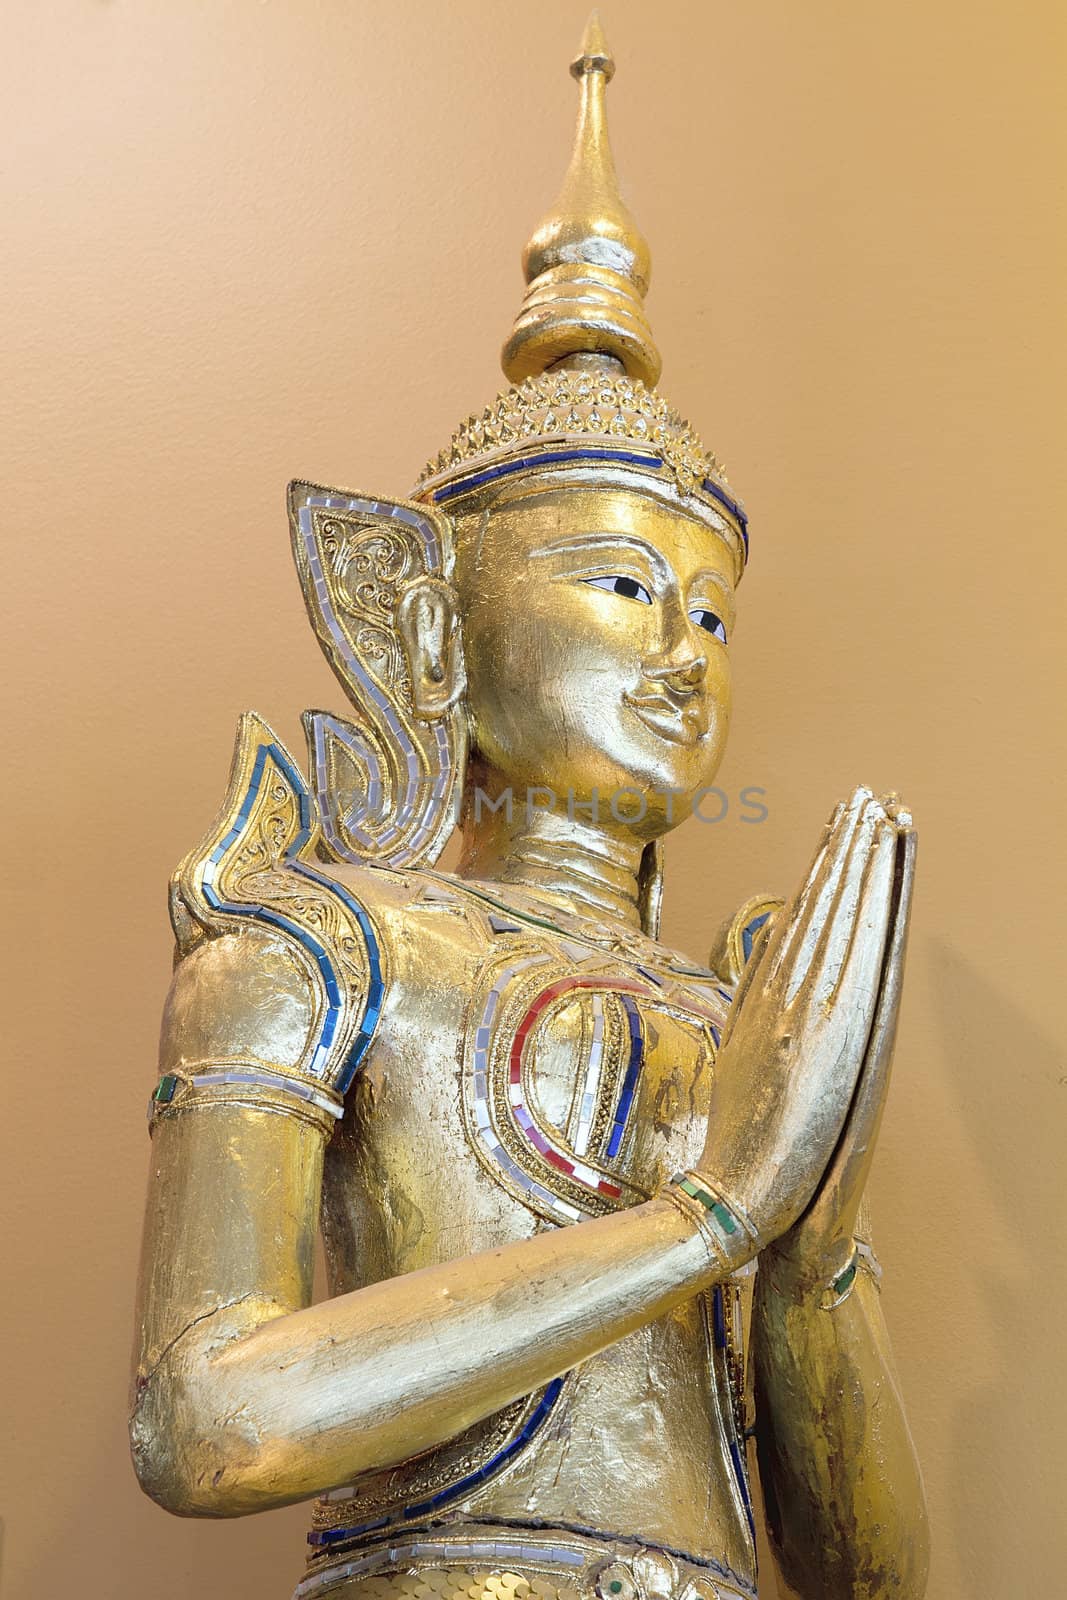 Thai Teppanom Angel Statue Closeup by jpldesigns